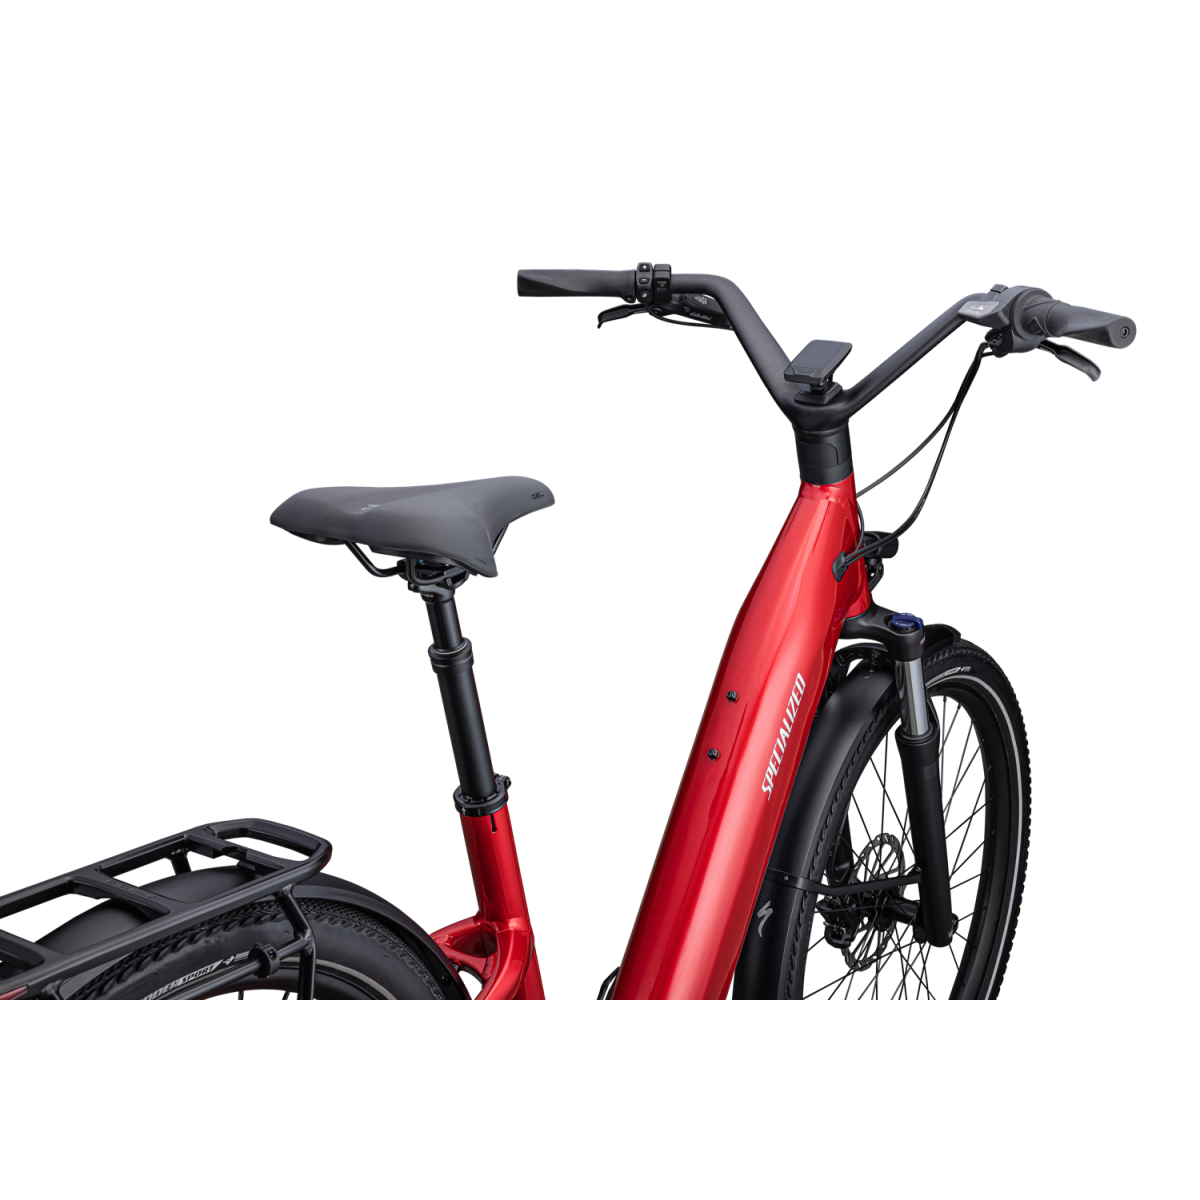 Specialized Turbo Como 4.0 IGH elektrinis dviratis / Red Tint